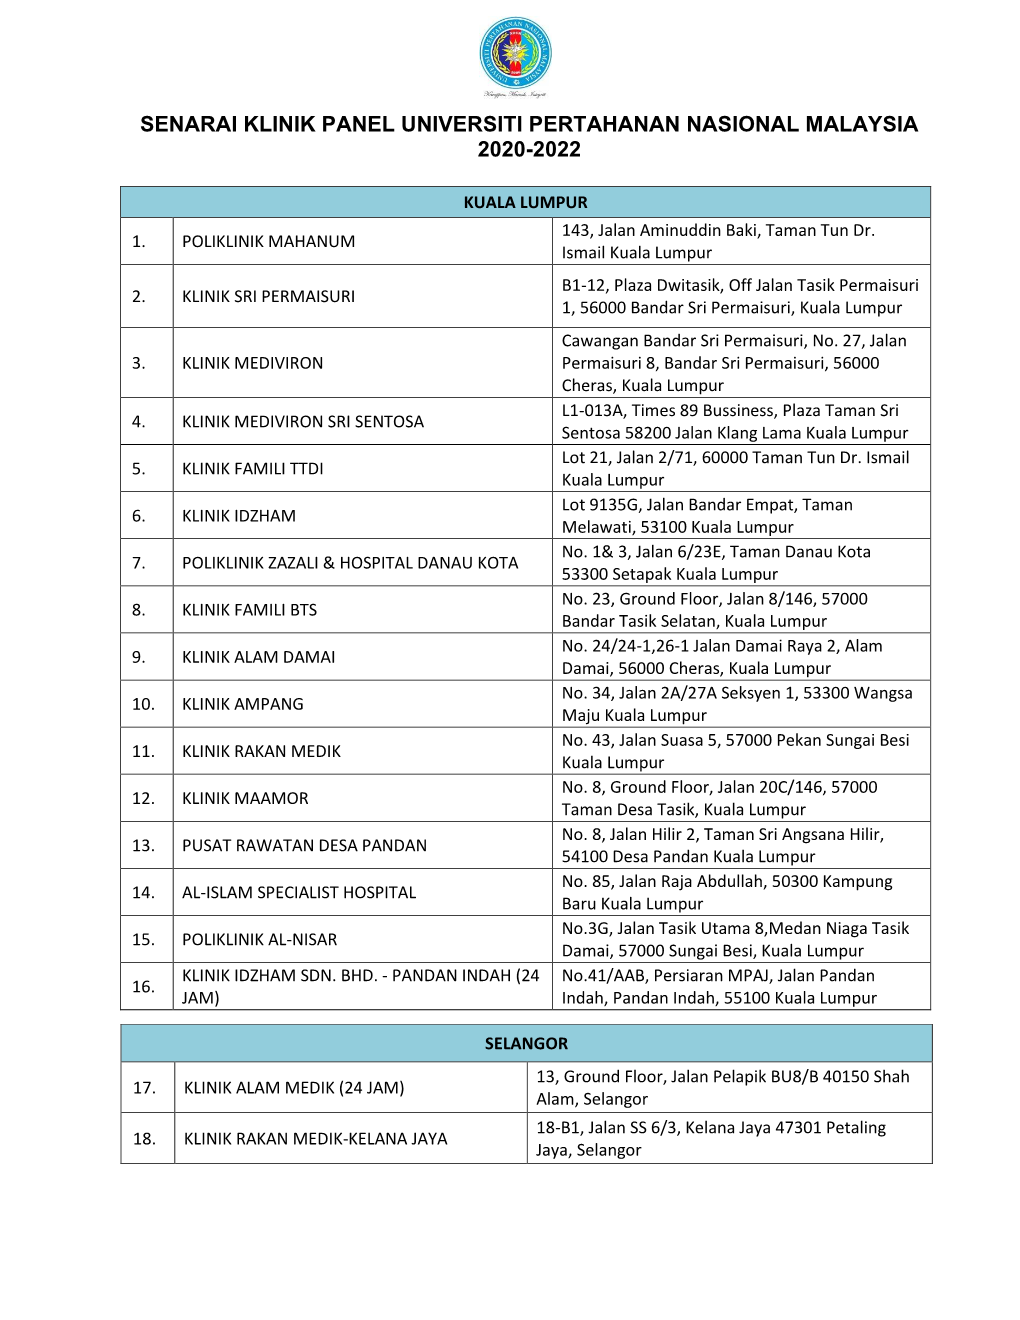 Klinik Panel Universiti Pertahanan Nasional Malaysia 2020-2022